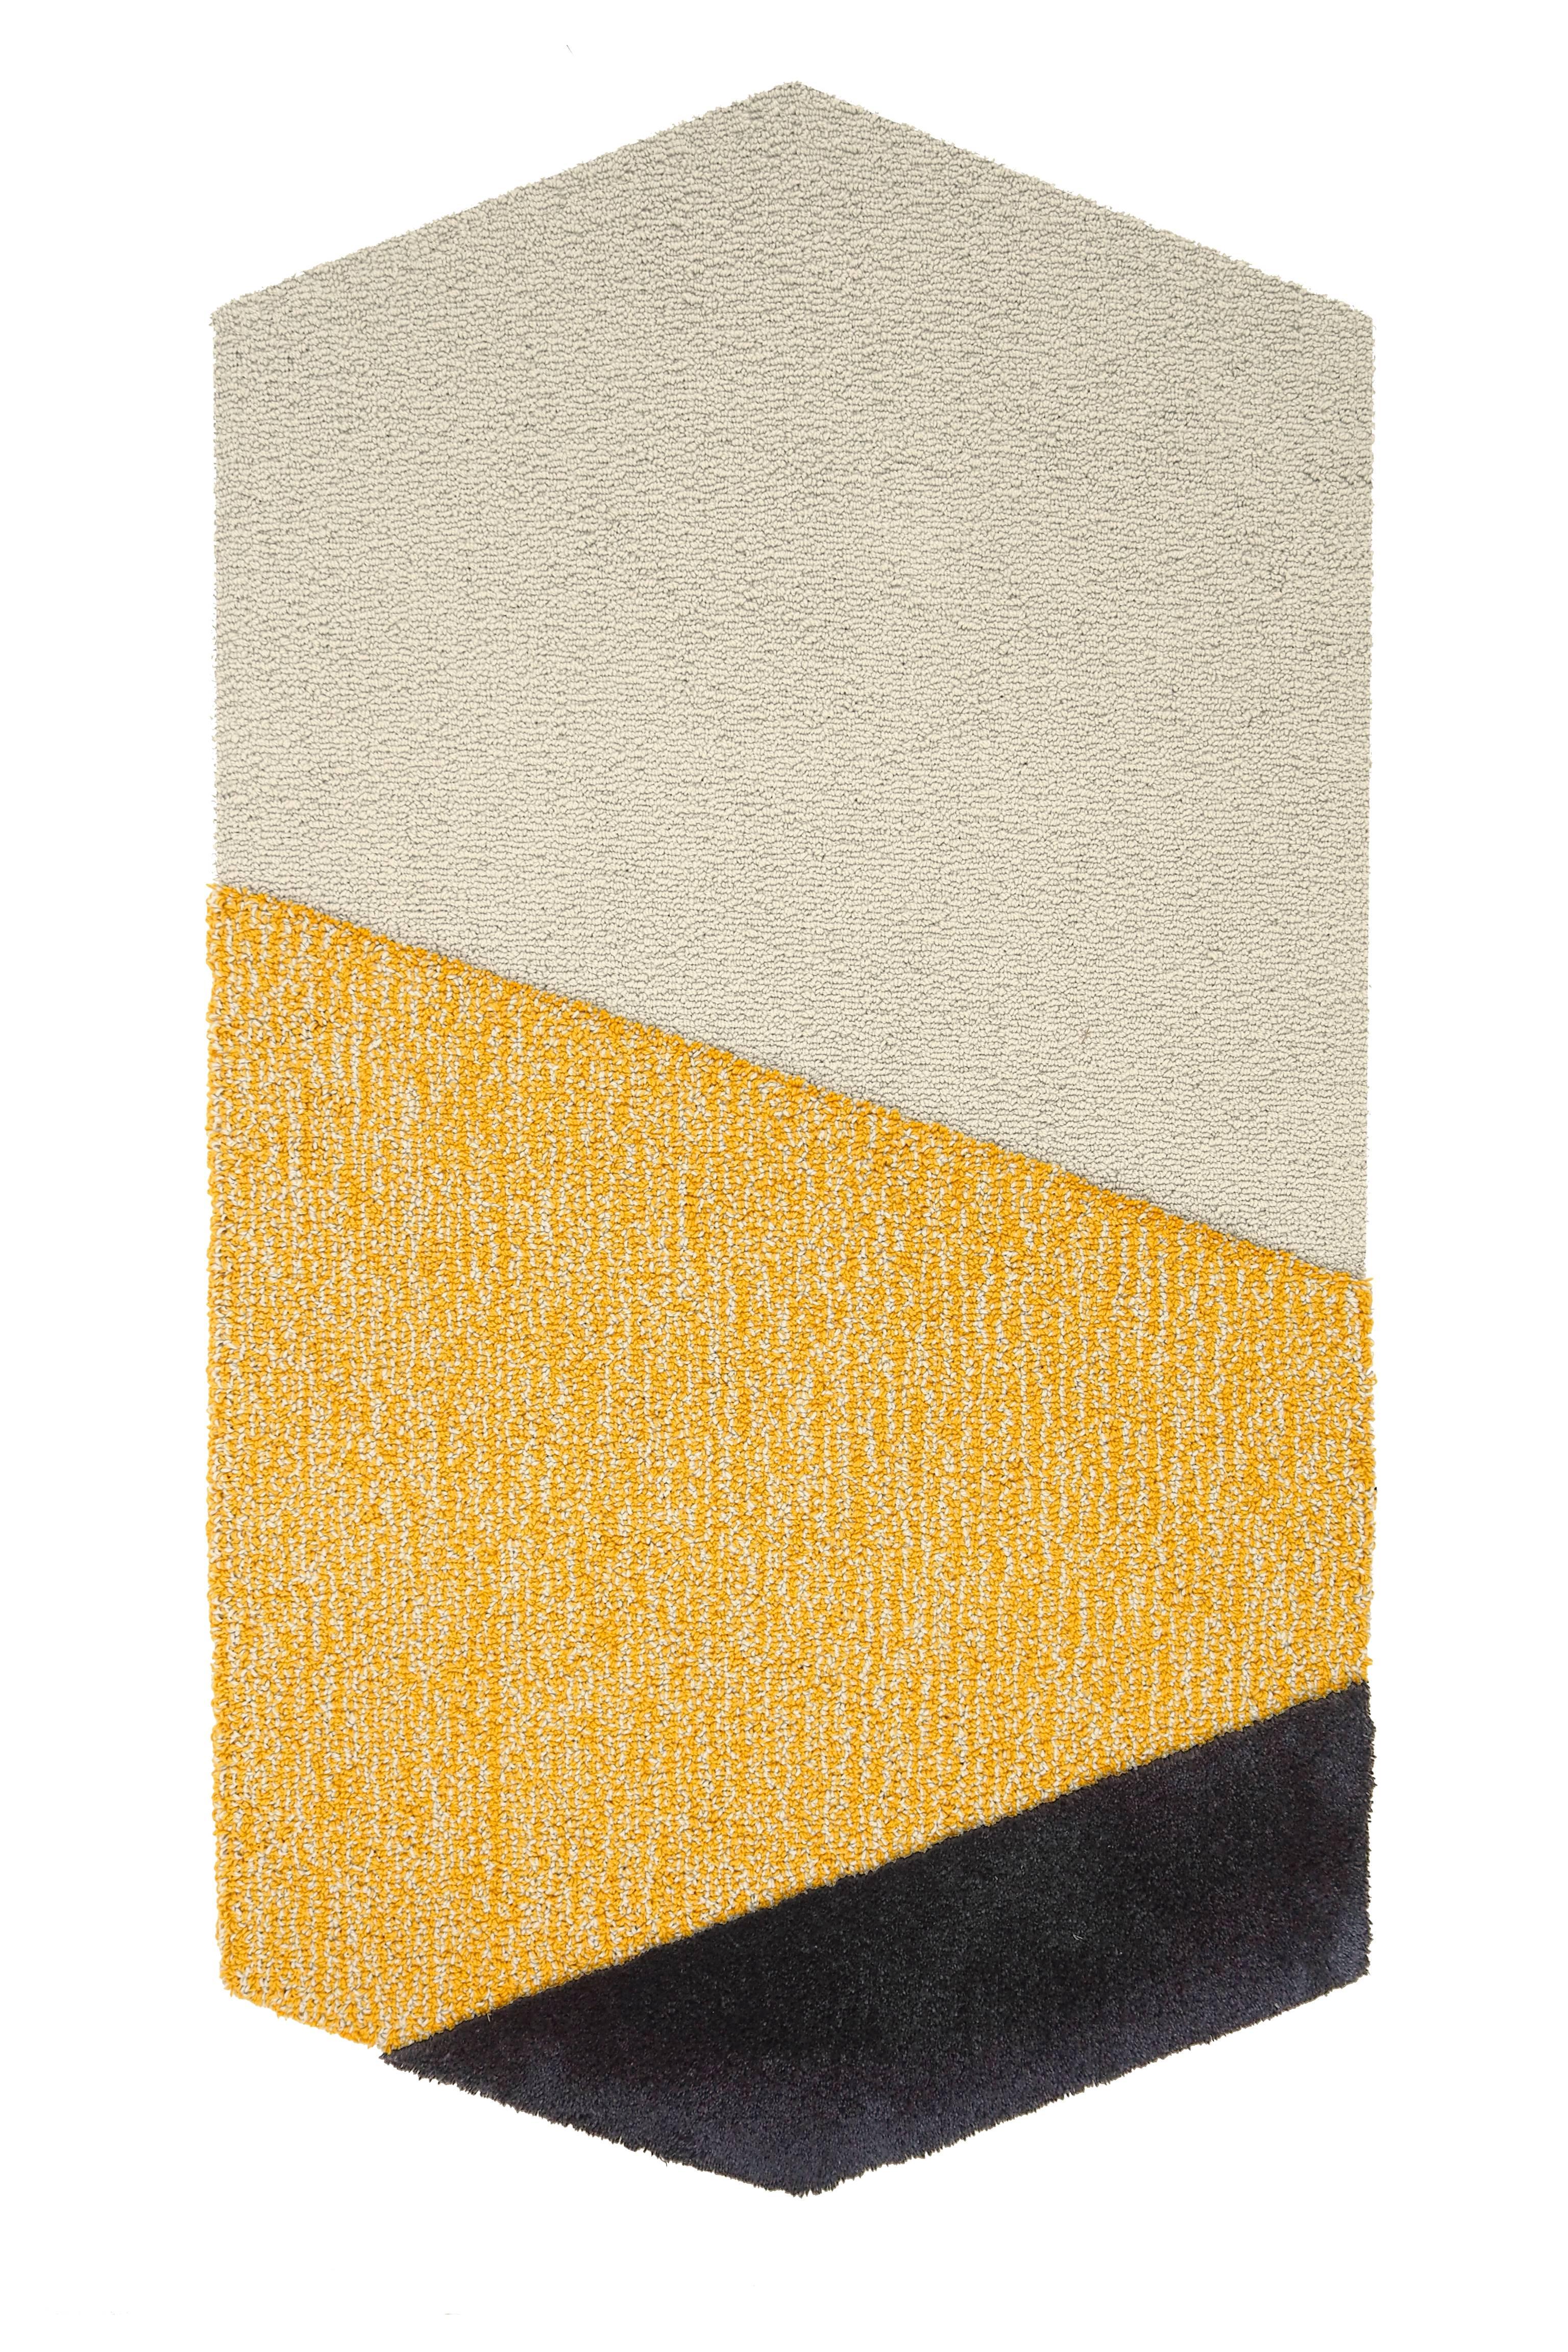 Contemporary Medium Yellow Gray Oci Rug Triptych by Seraina Lareida For Sale